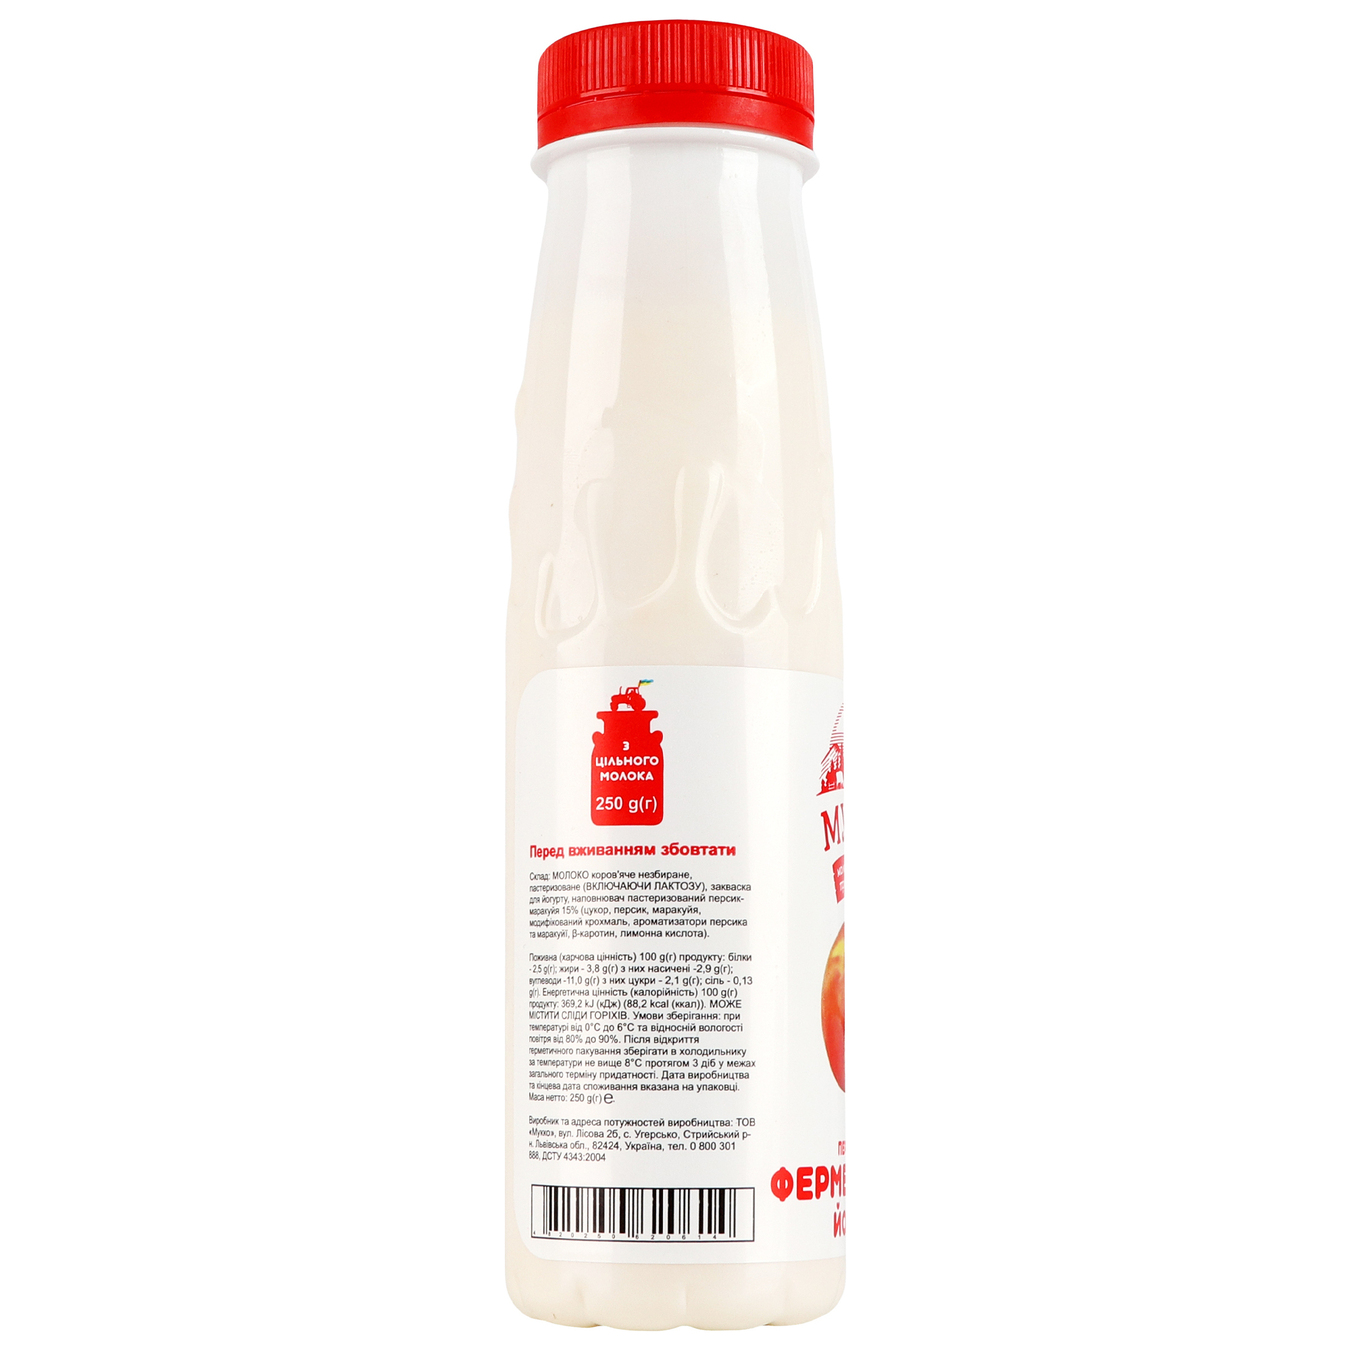 Yogurt Mukko peach-passion fruit 2.6% 250g bottle 4